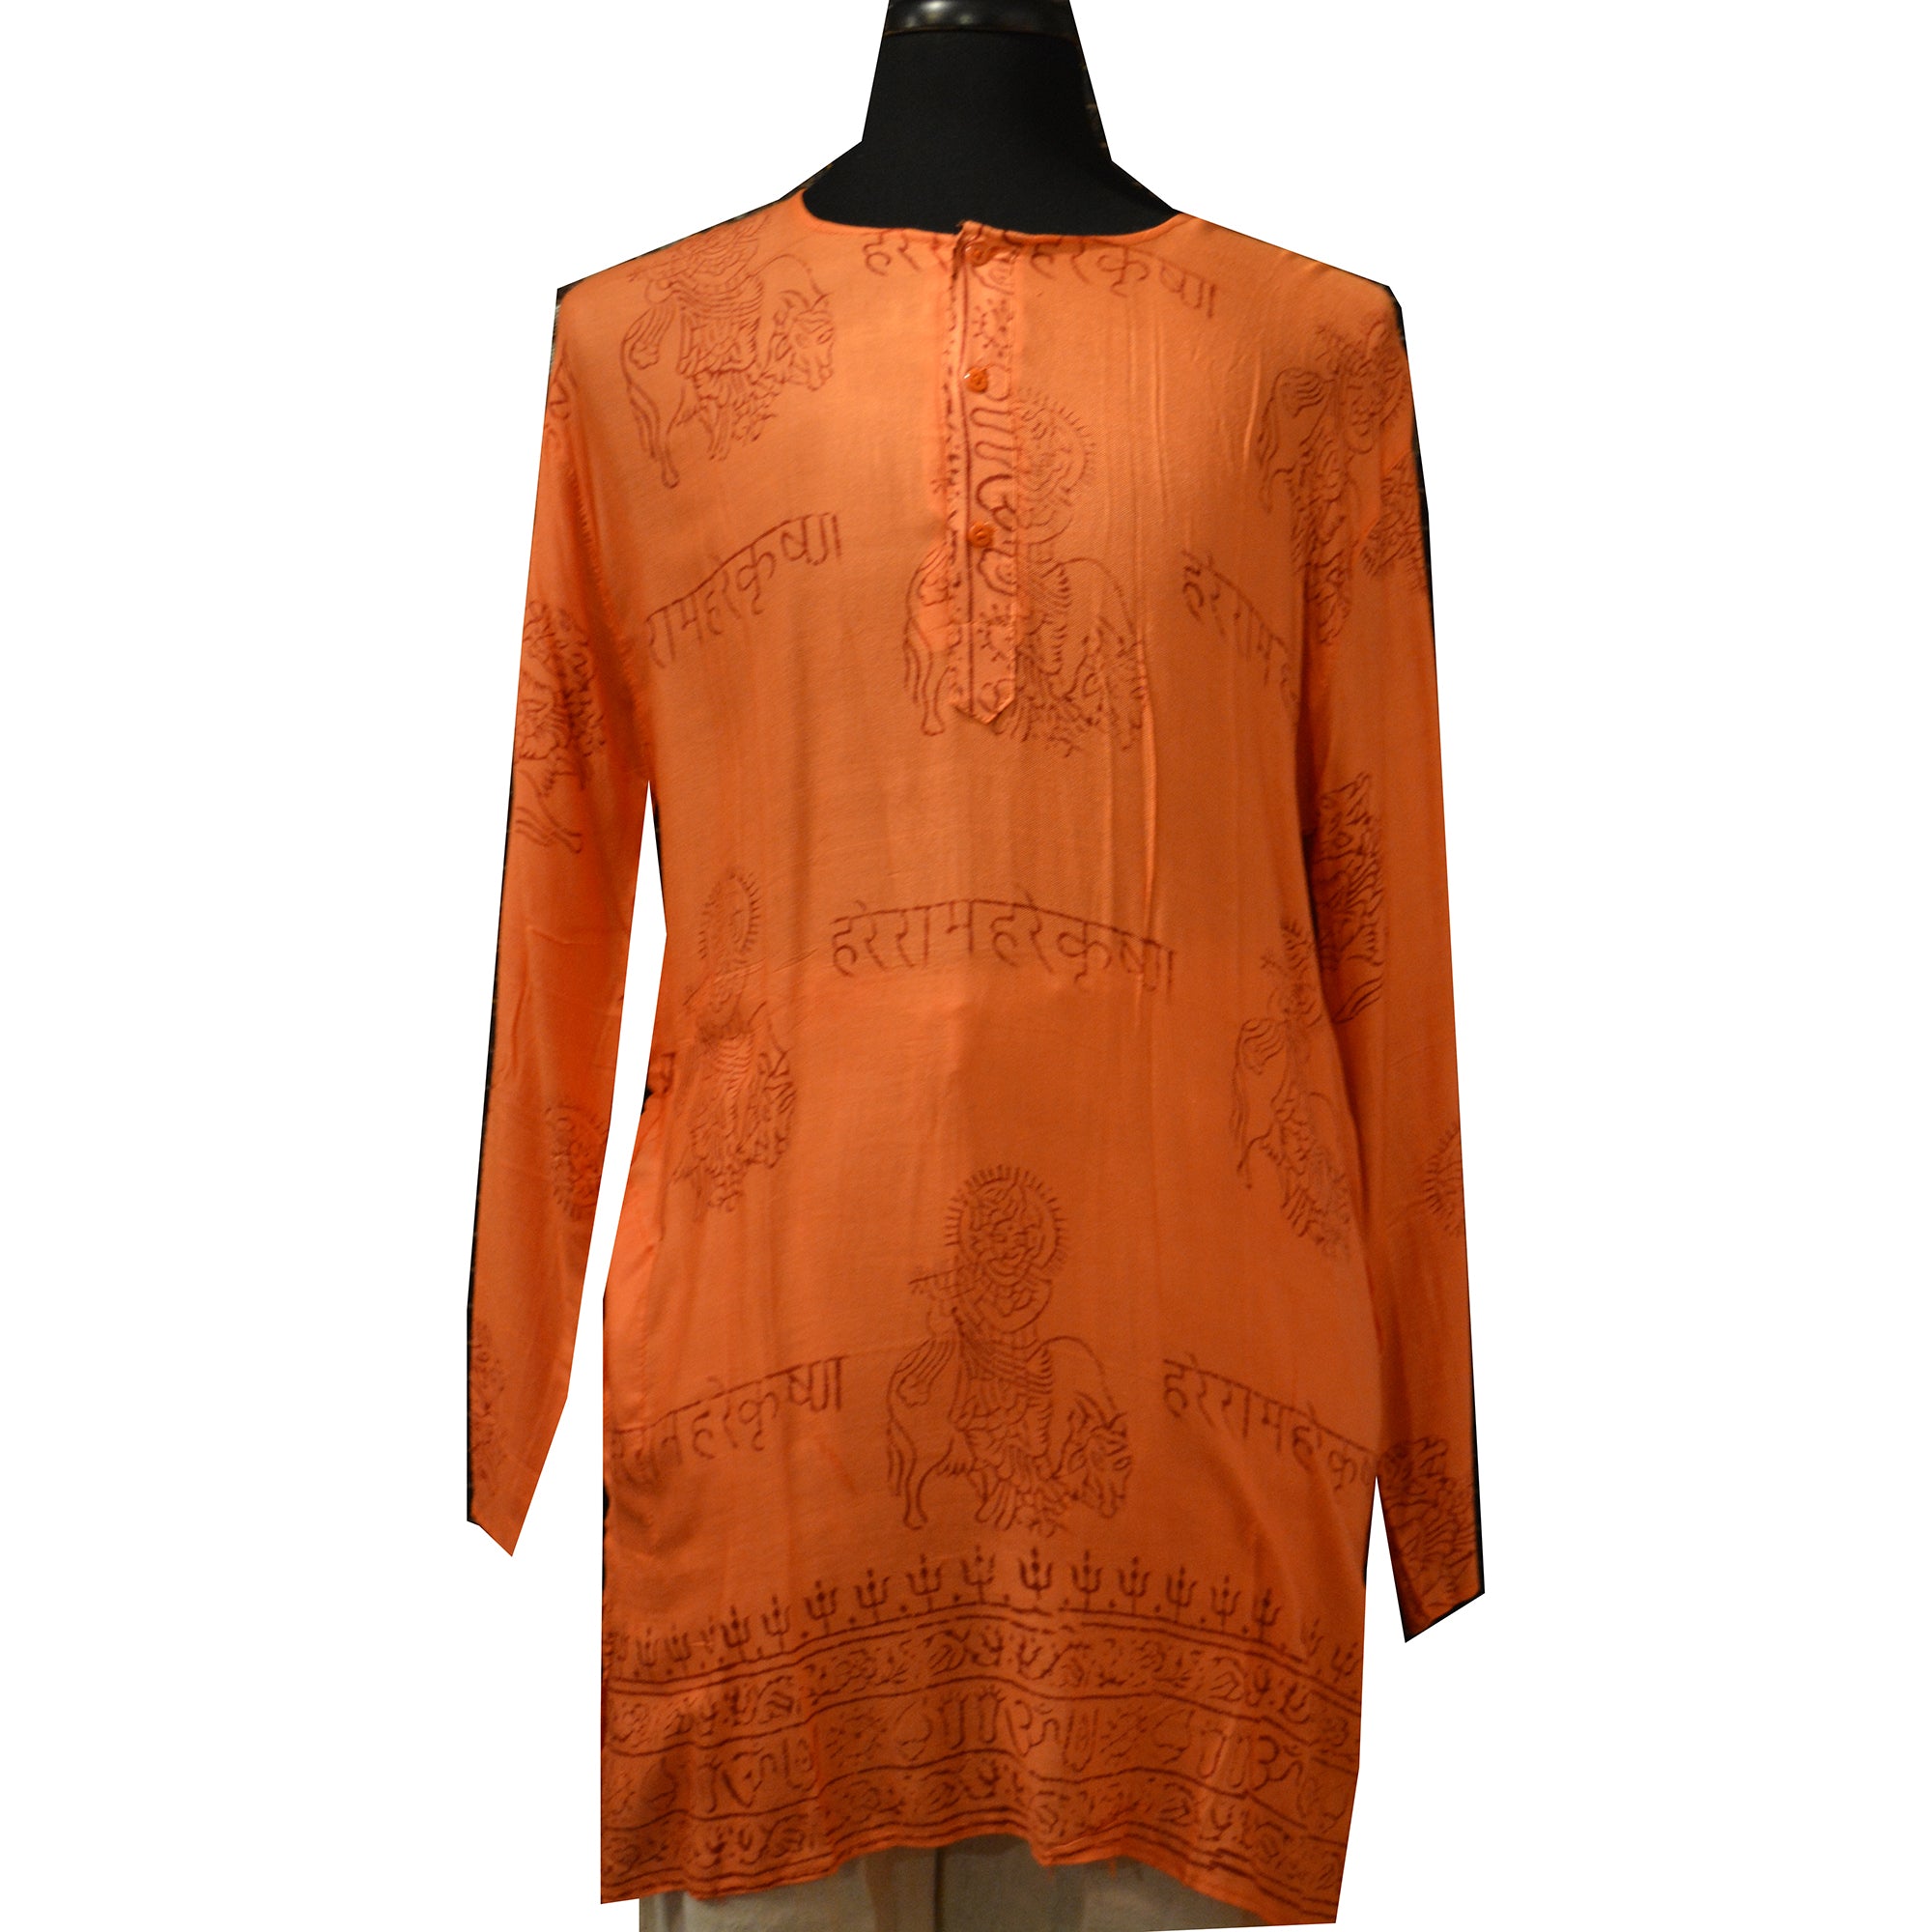 Om print shirt - Vintage India NYC